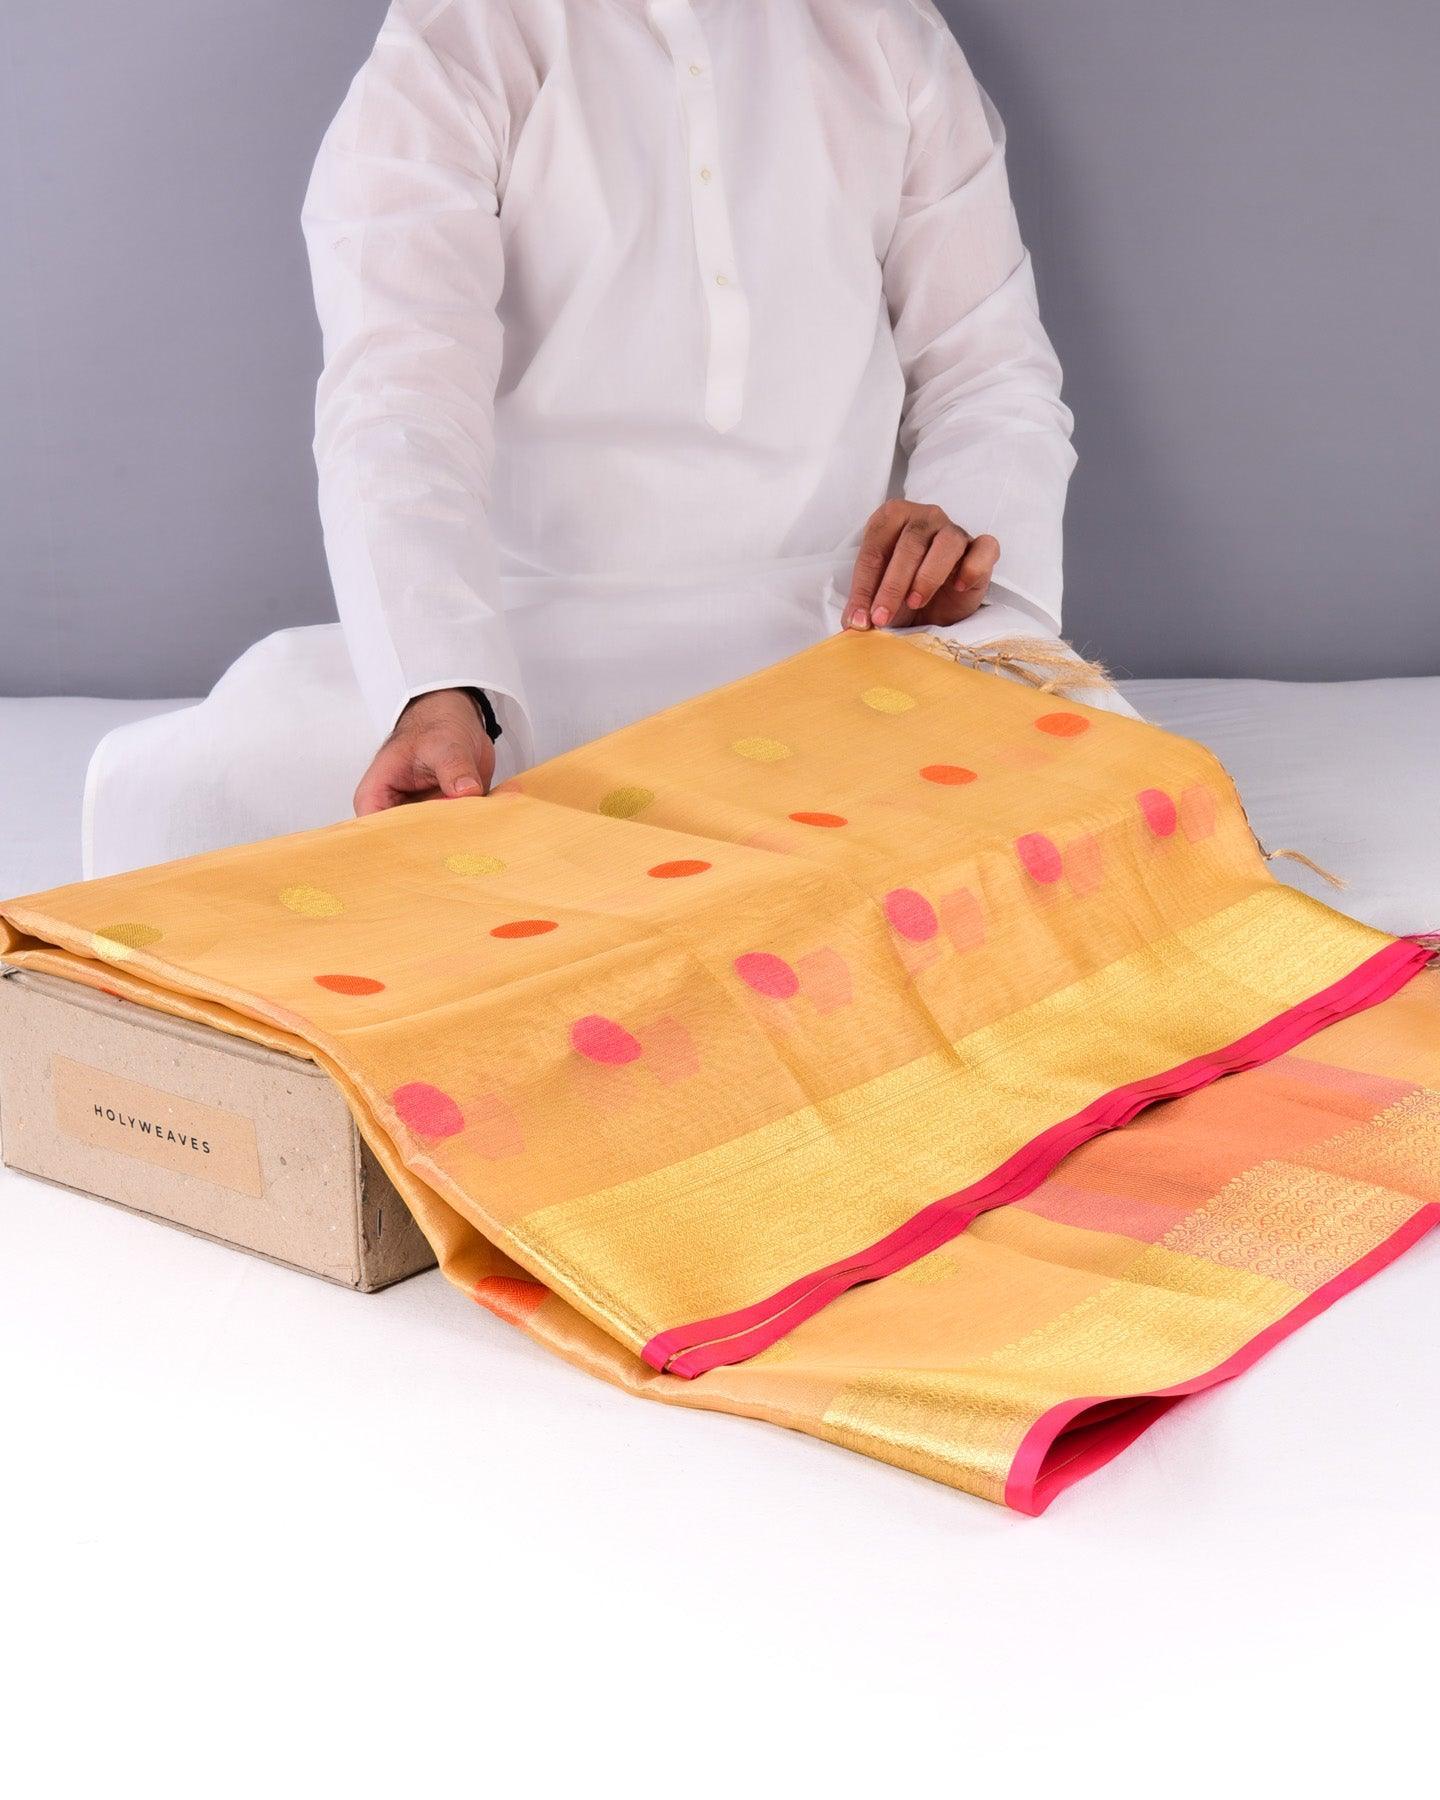 Metallic Yellow Banarasi Polka Buti Cutwork Brocade Woven Art Cotton Tissue Saree - By HolyWeaves, Benares